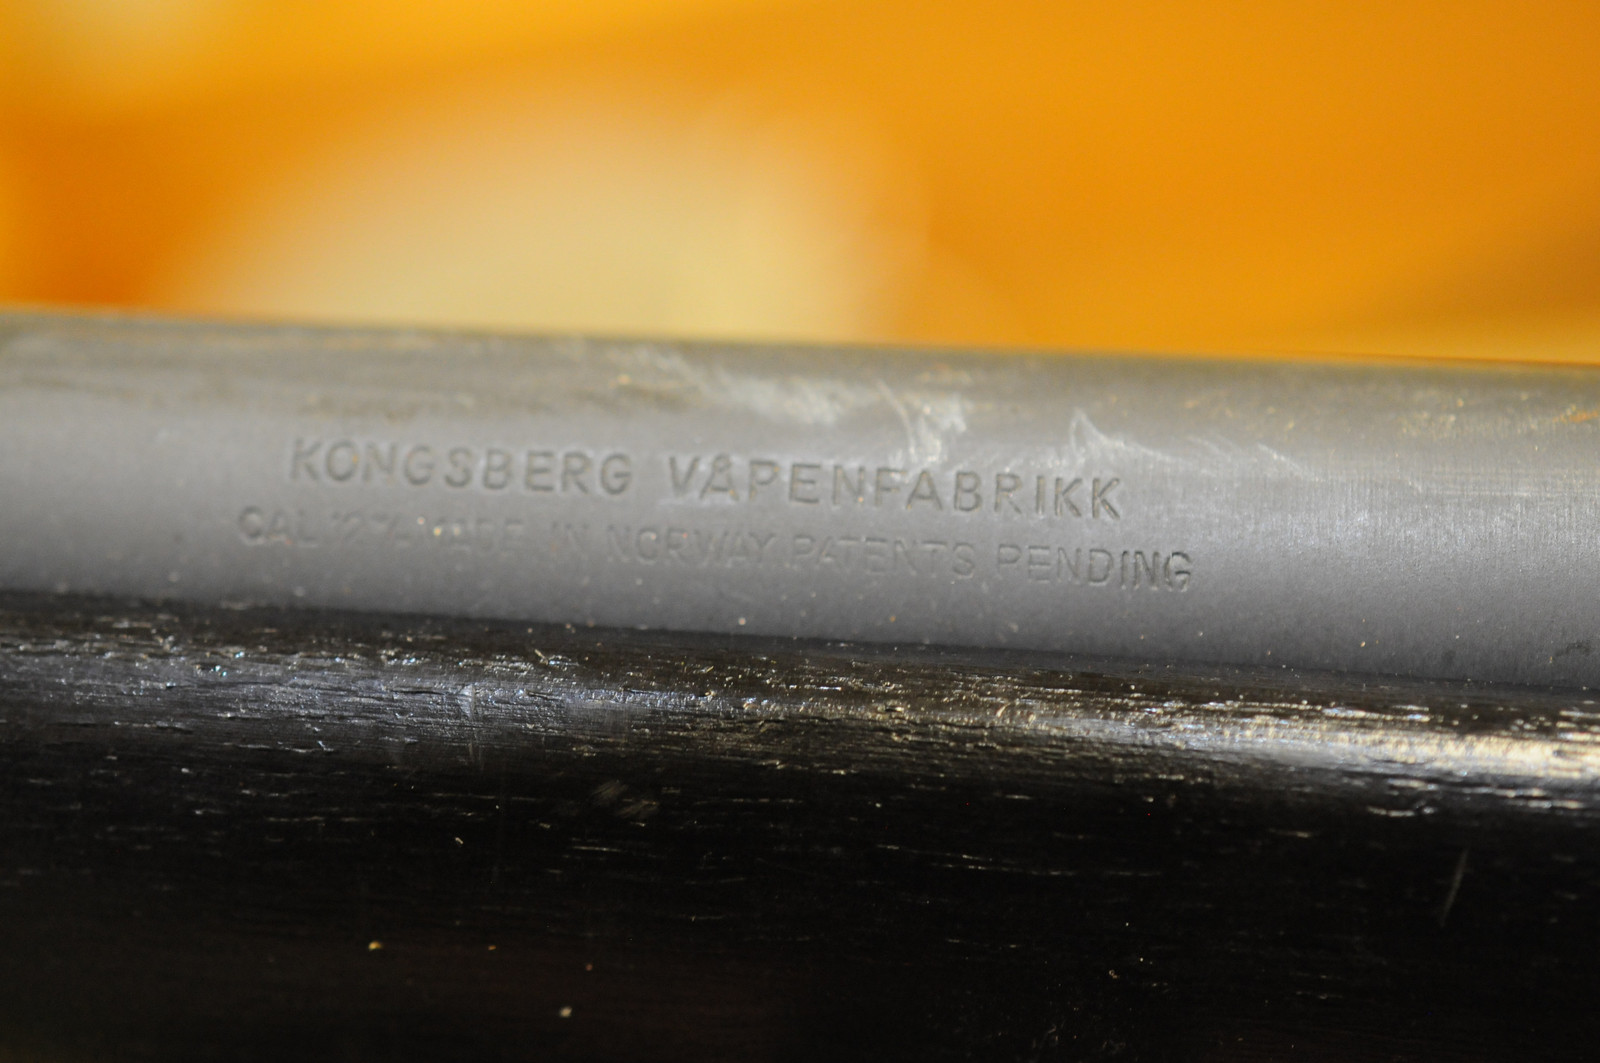 ./guns/fangst/bilder/Fangst-Kongsberg-M52-Redningskasse-10.jpg